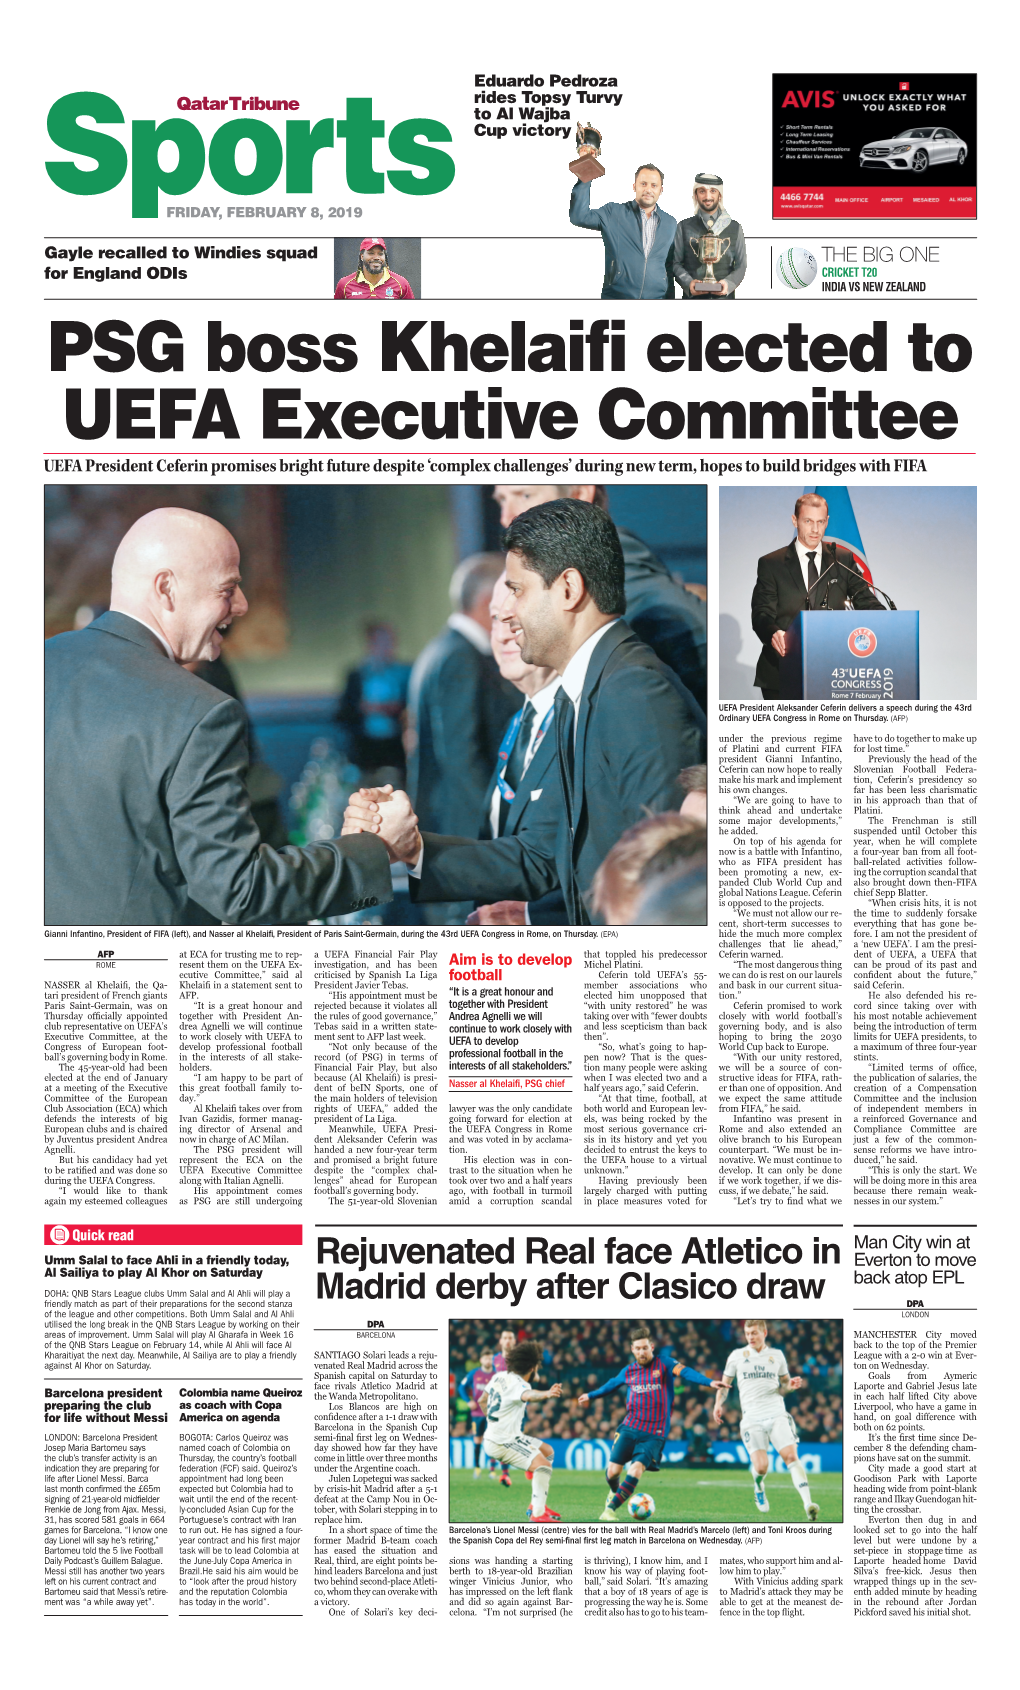 PSG Boss Khelaifi Elected to UEFA Executive Committee